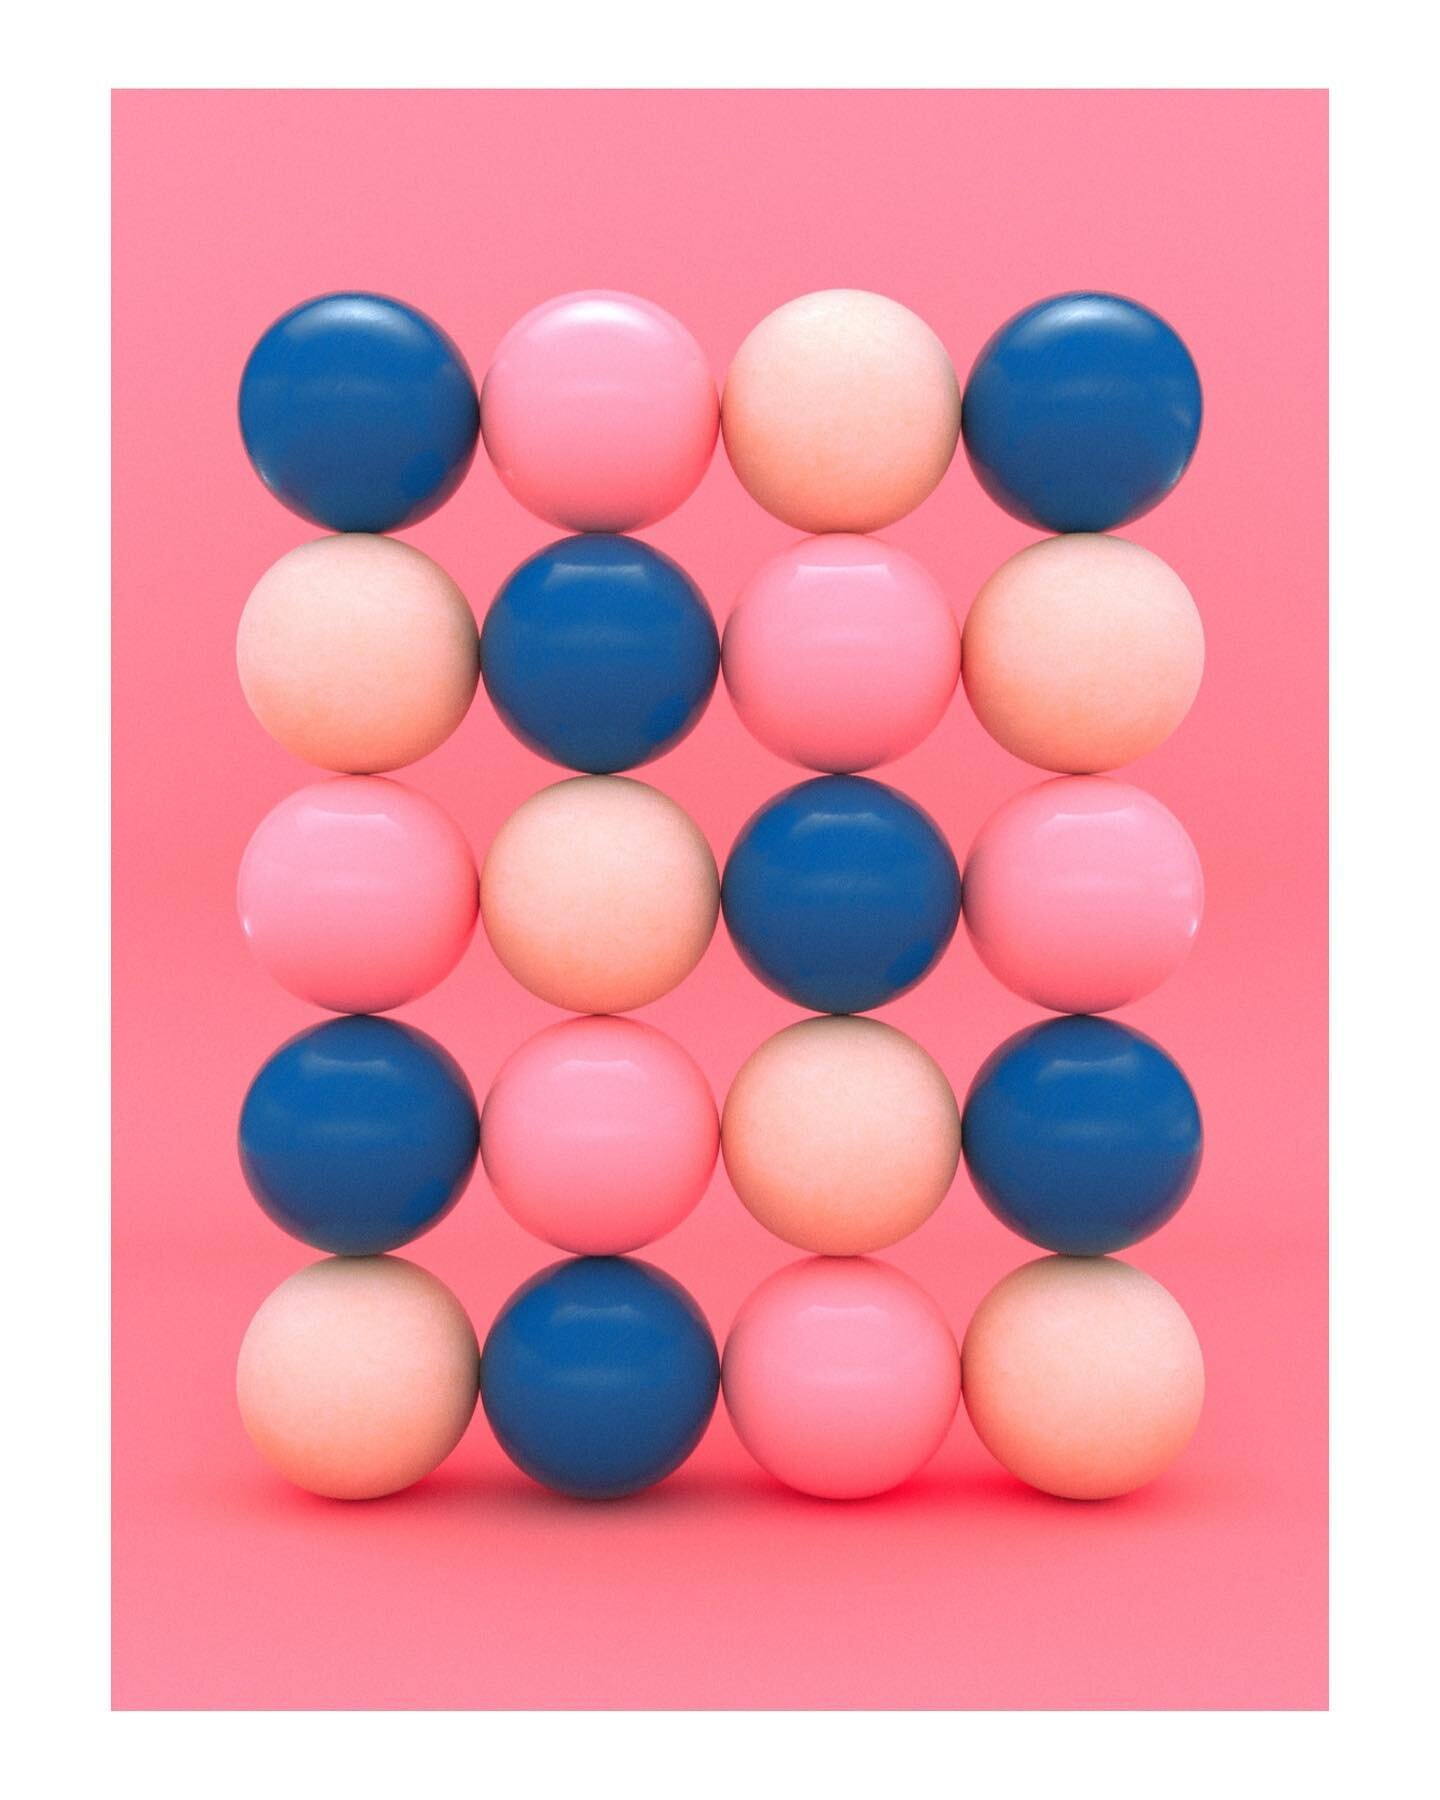 &bull; Color Studies &bull; Bubblegum

#color #cinema4d #octanerender #spheres #blue #pink